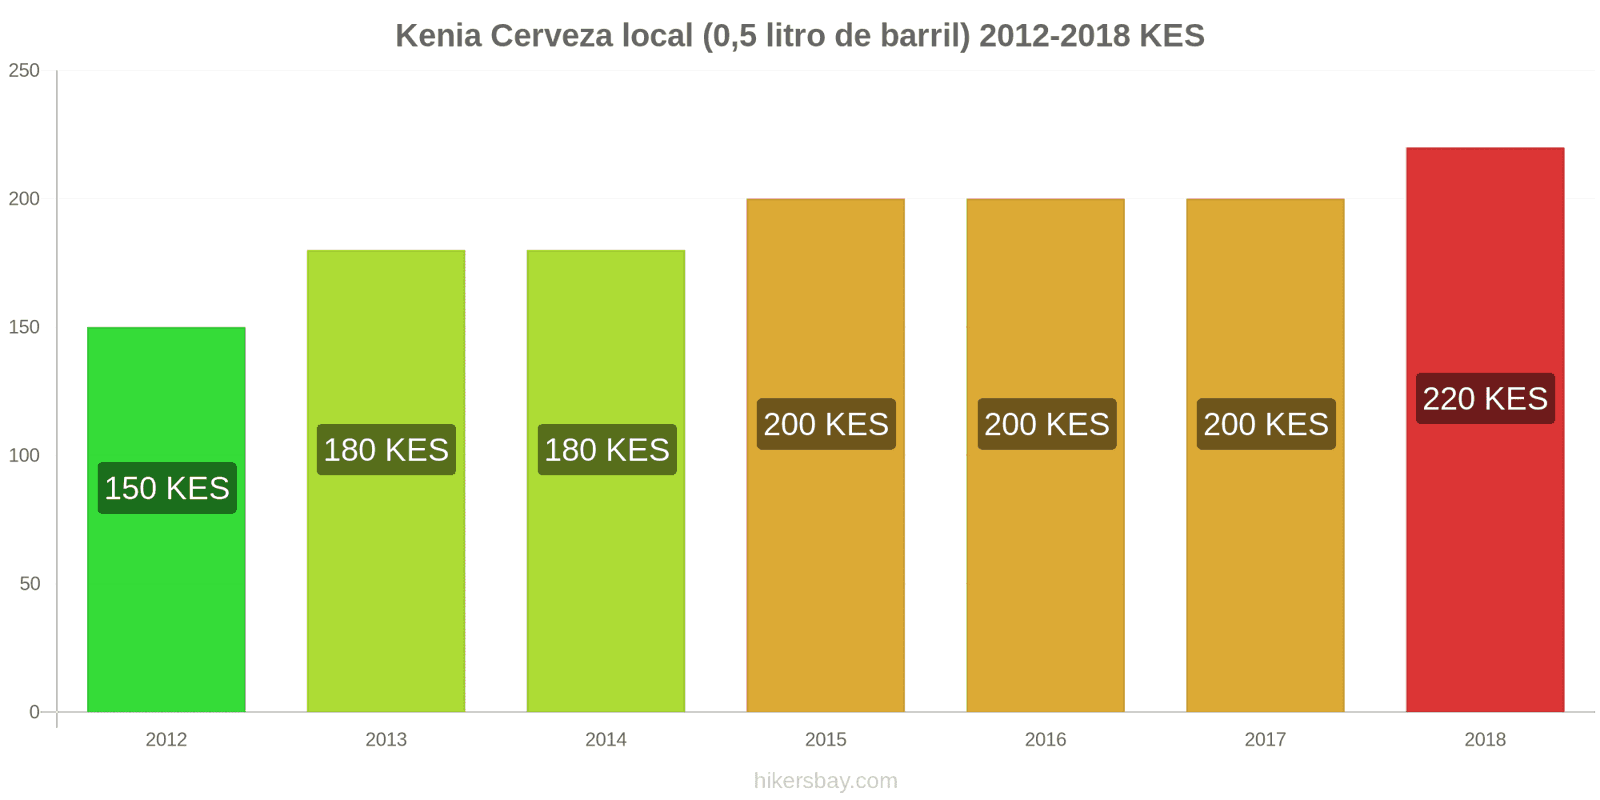 Kenia cambios de precios Cerveza de barril (0,5 litros) hikersbay.com